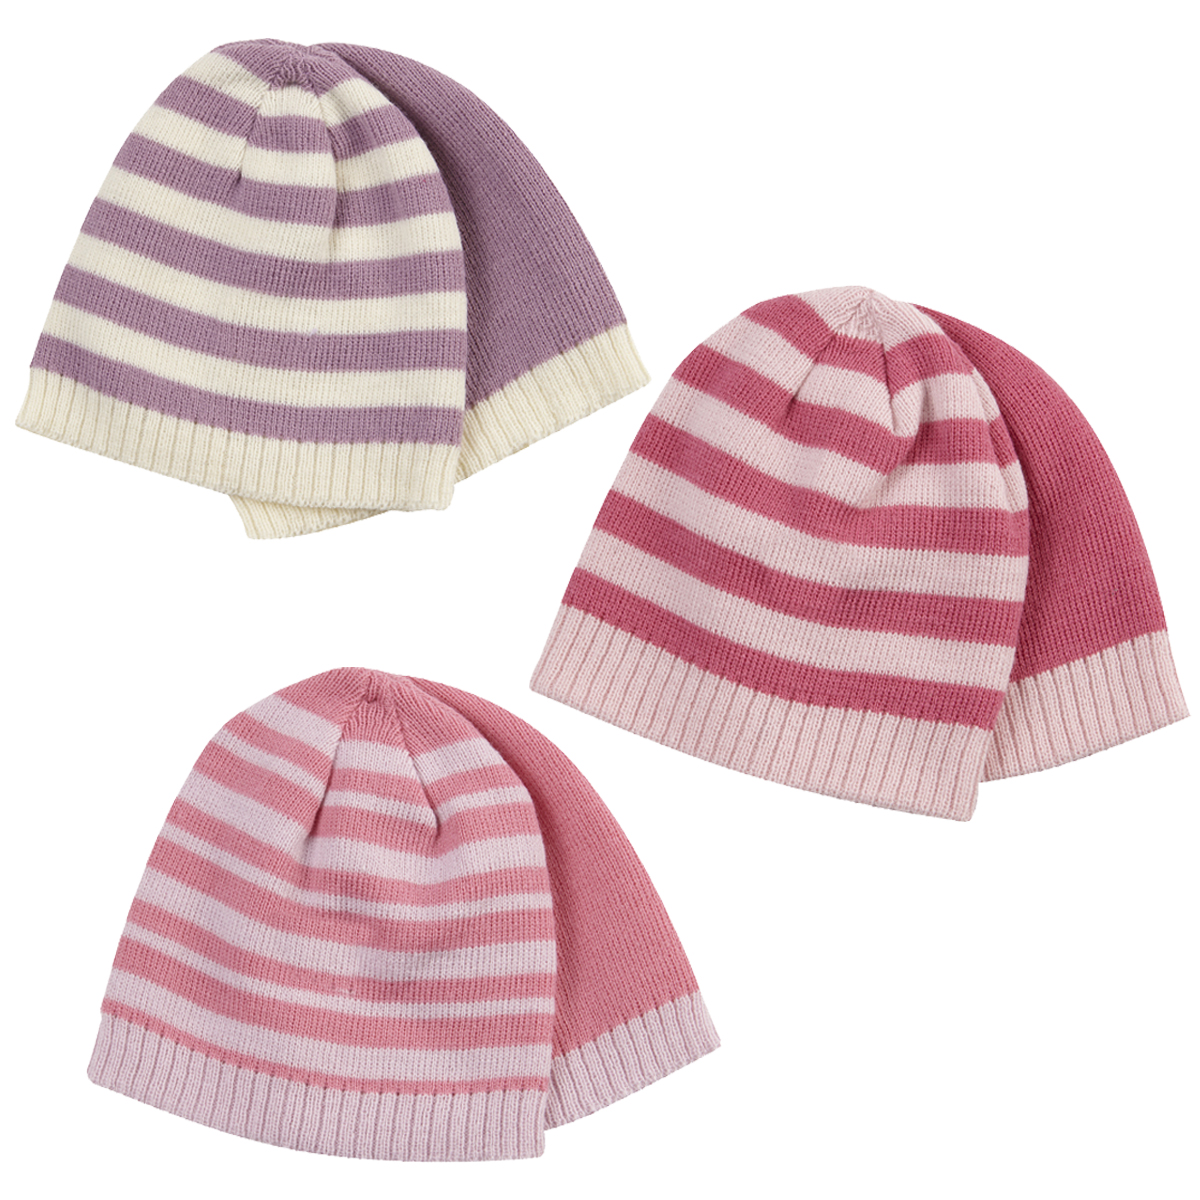 infant toboggan hats